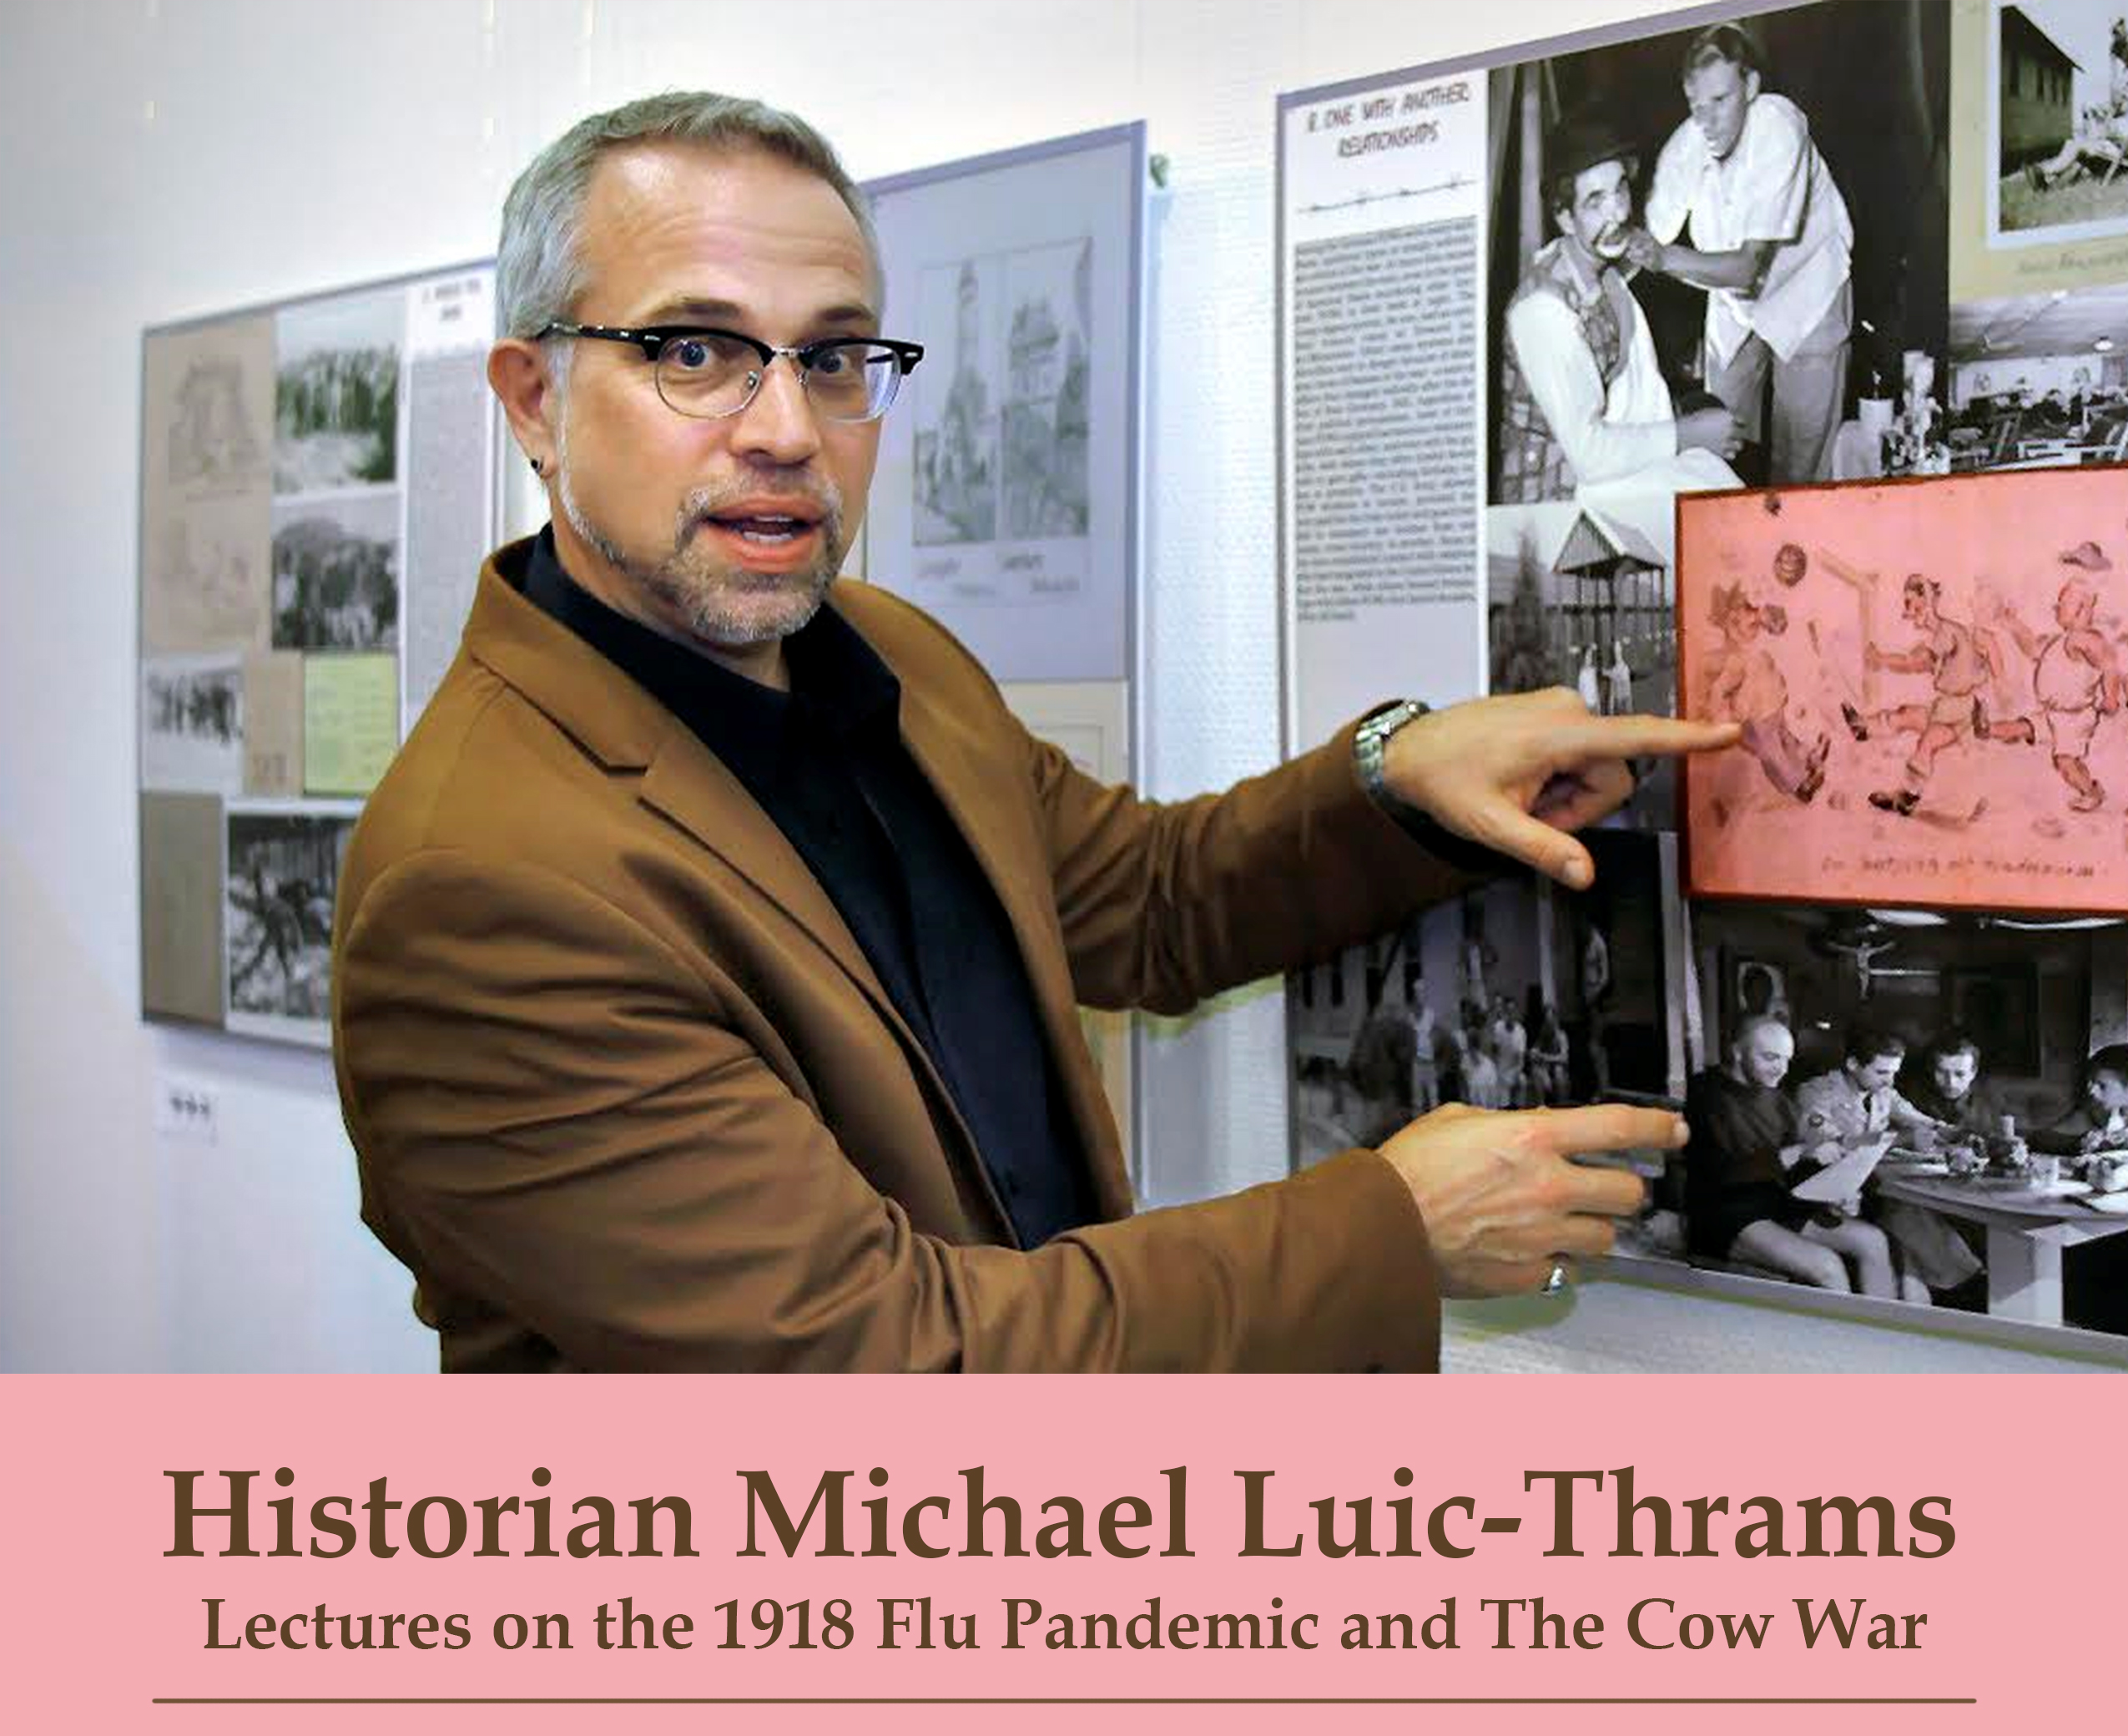 Michael Luic-Thrams